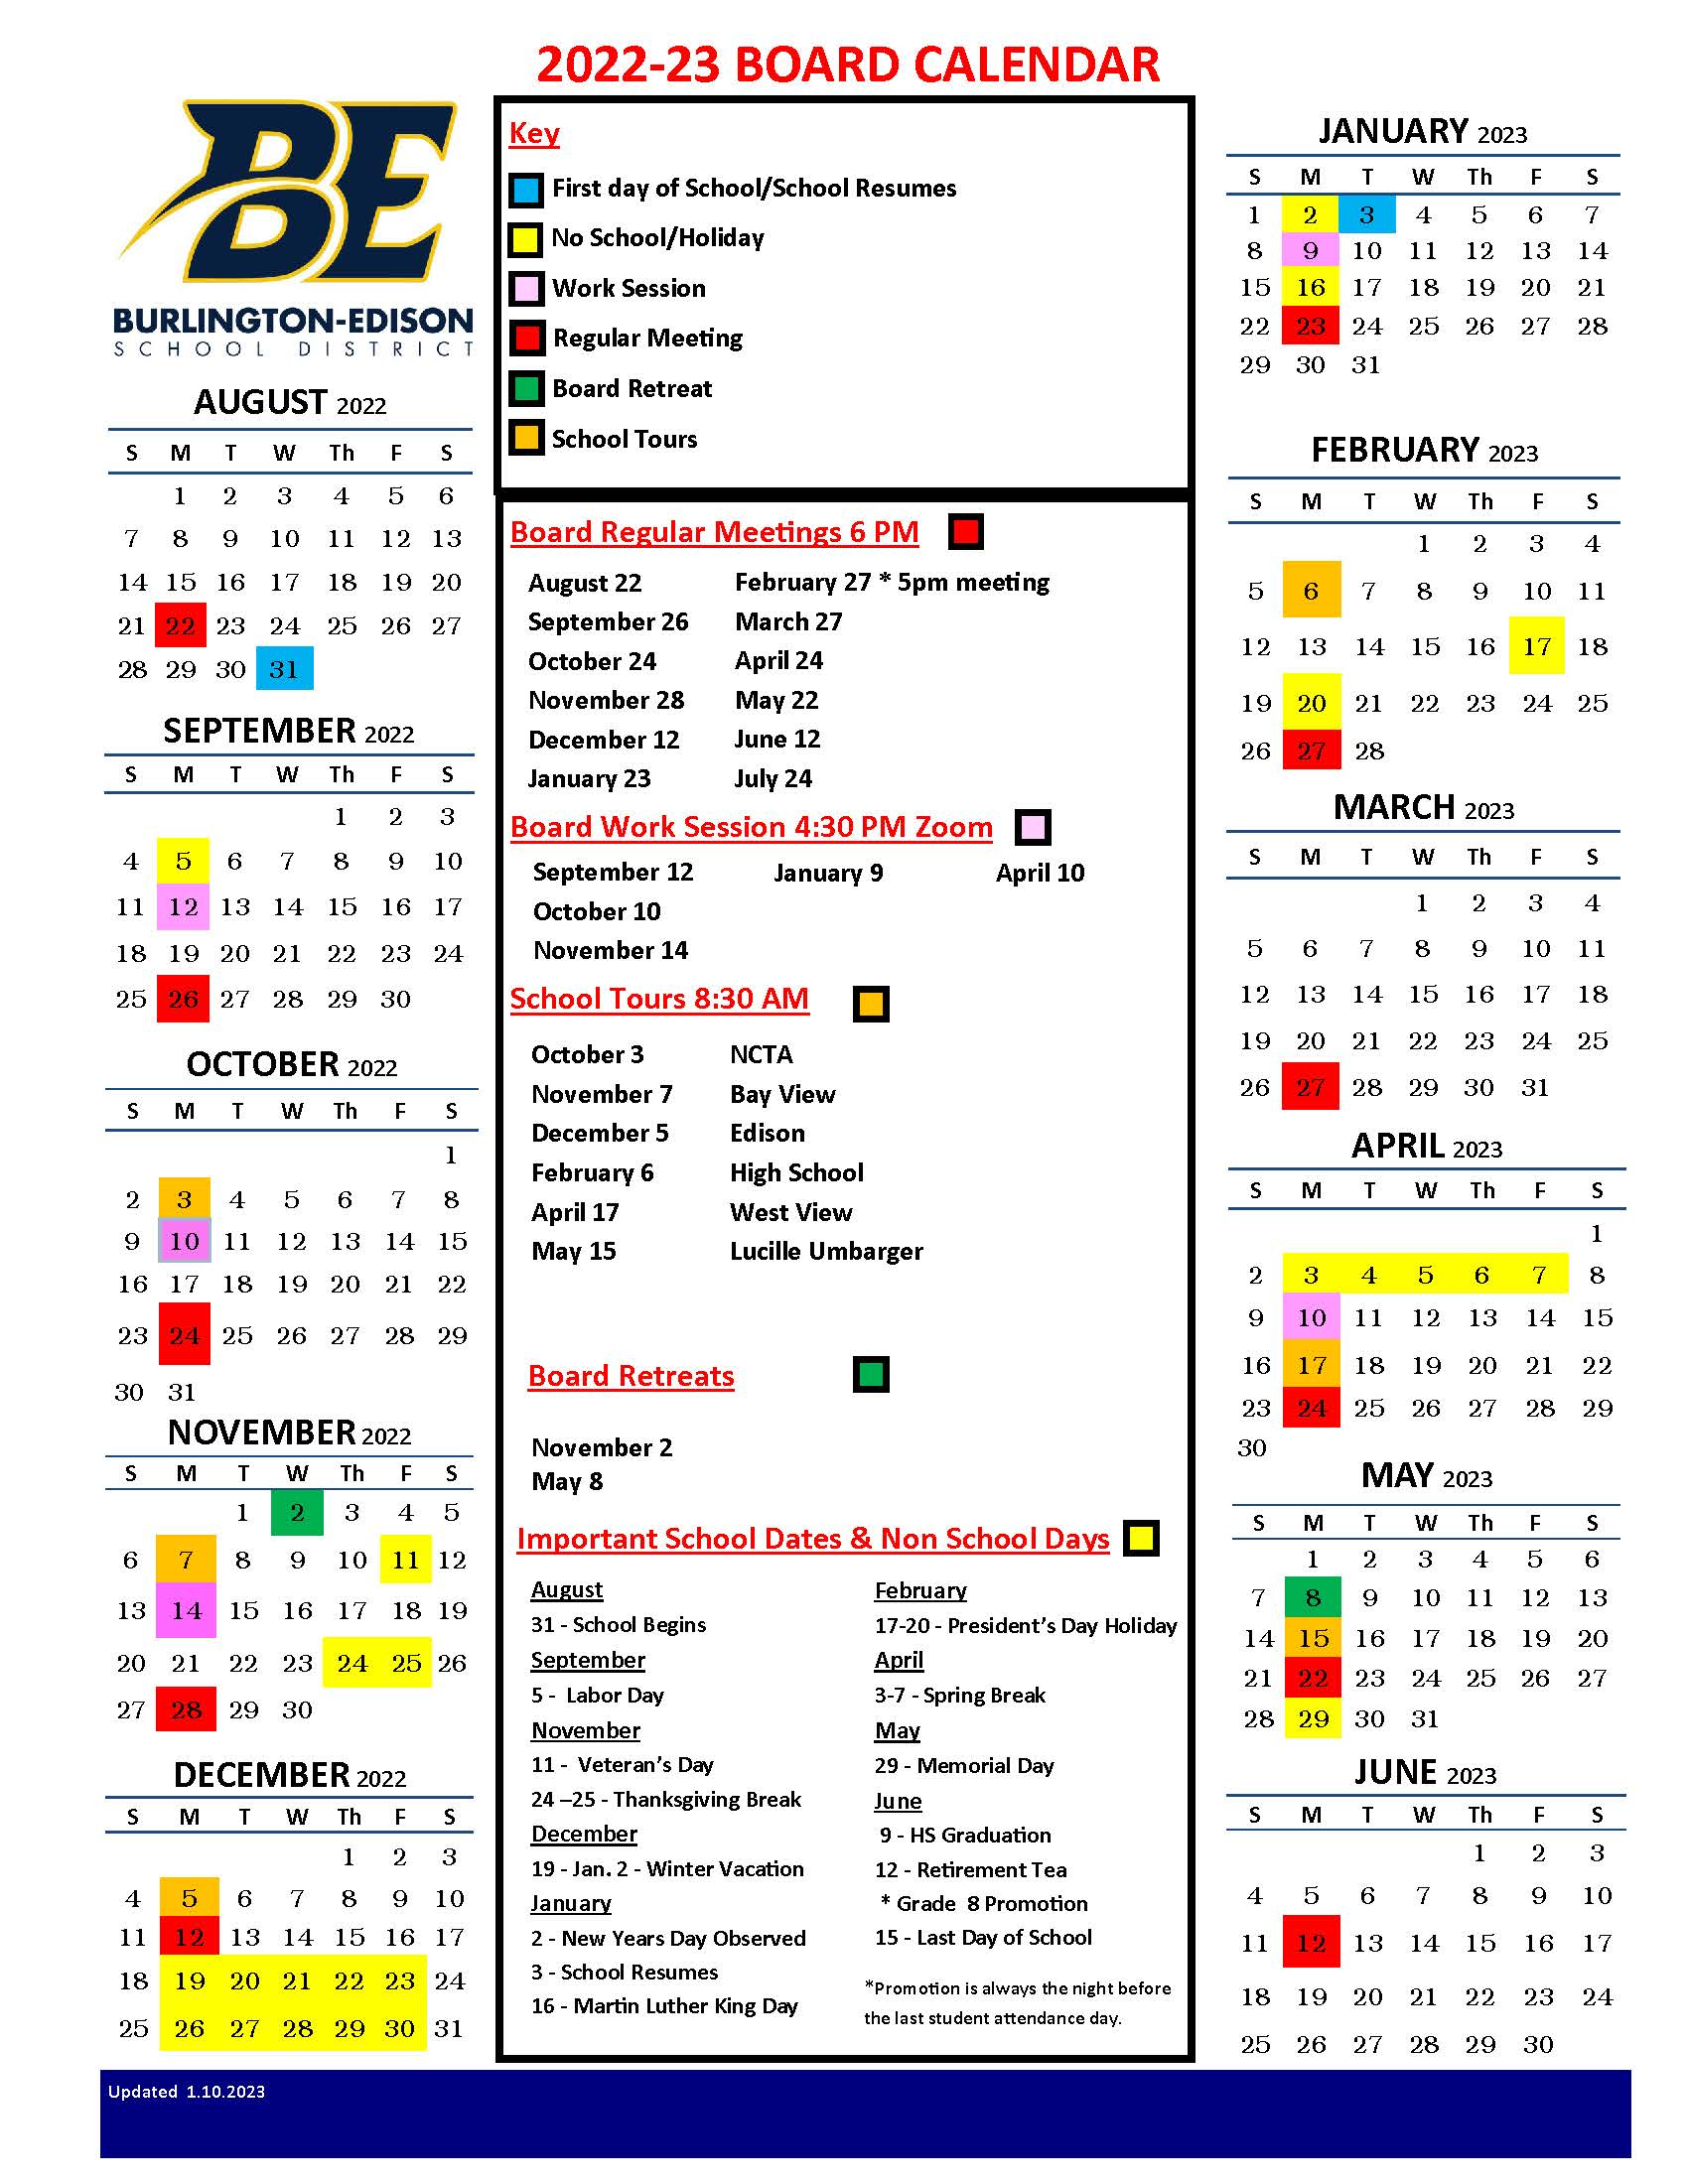 School board calendar - click to open in PDF